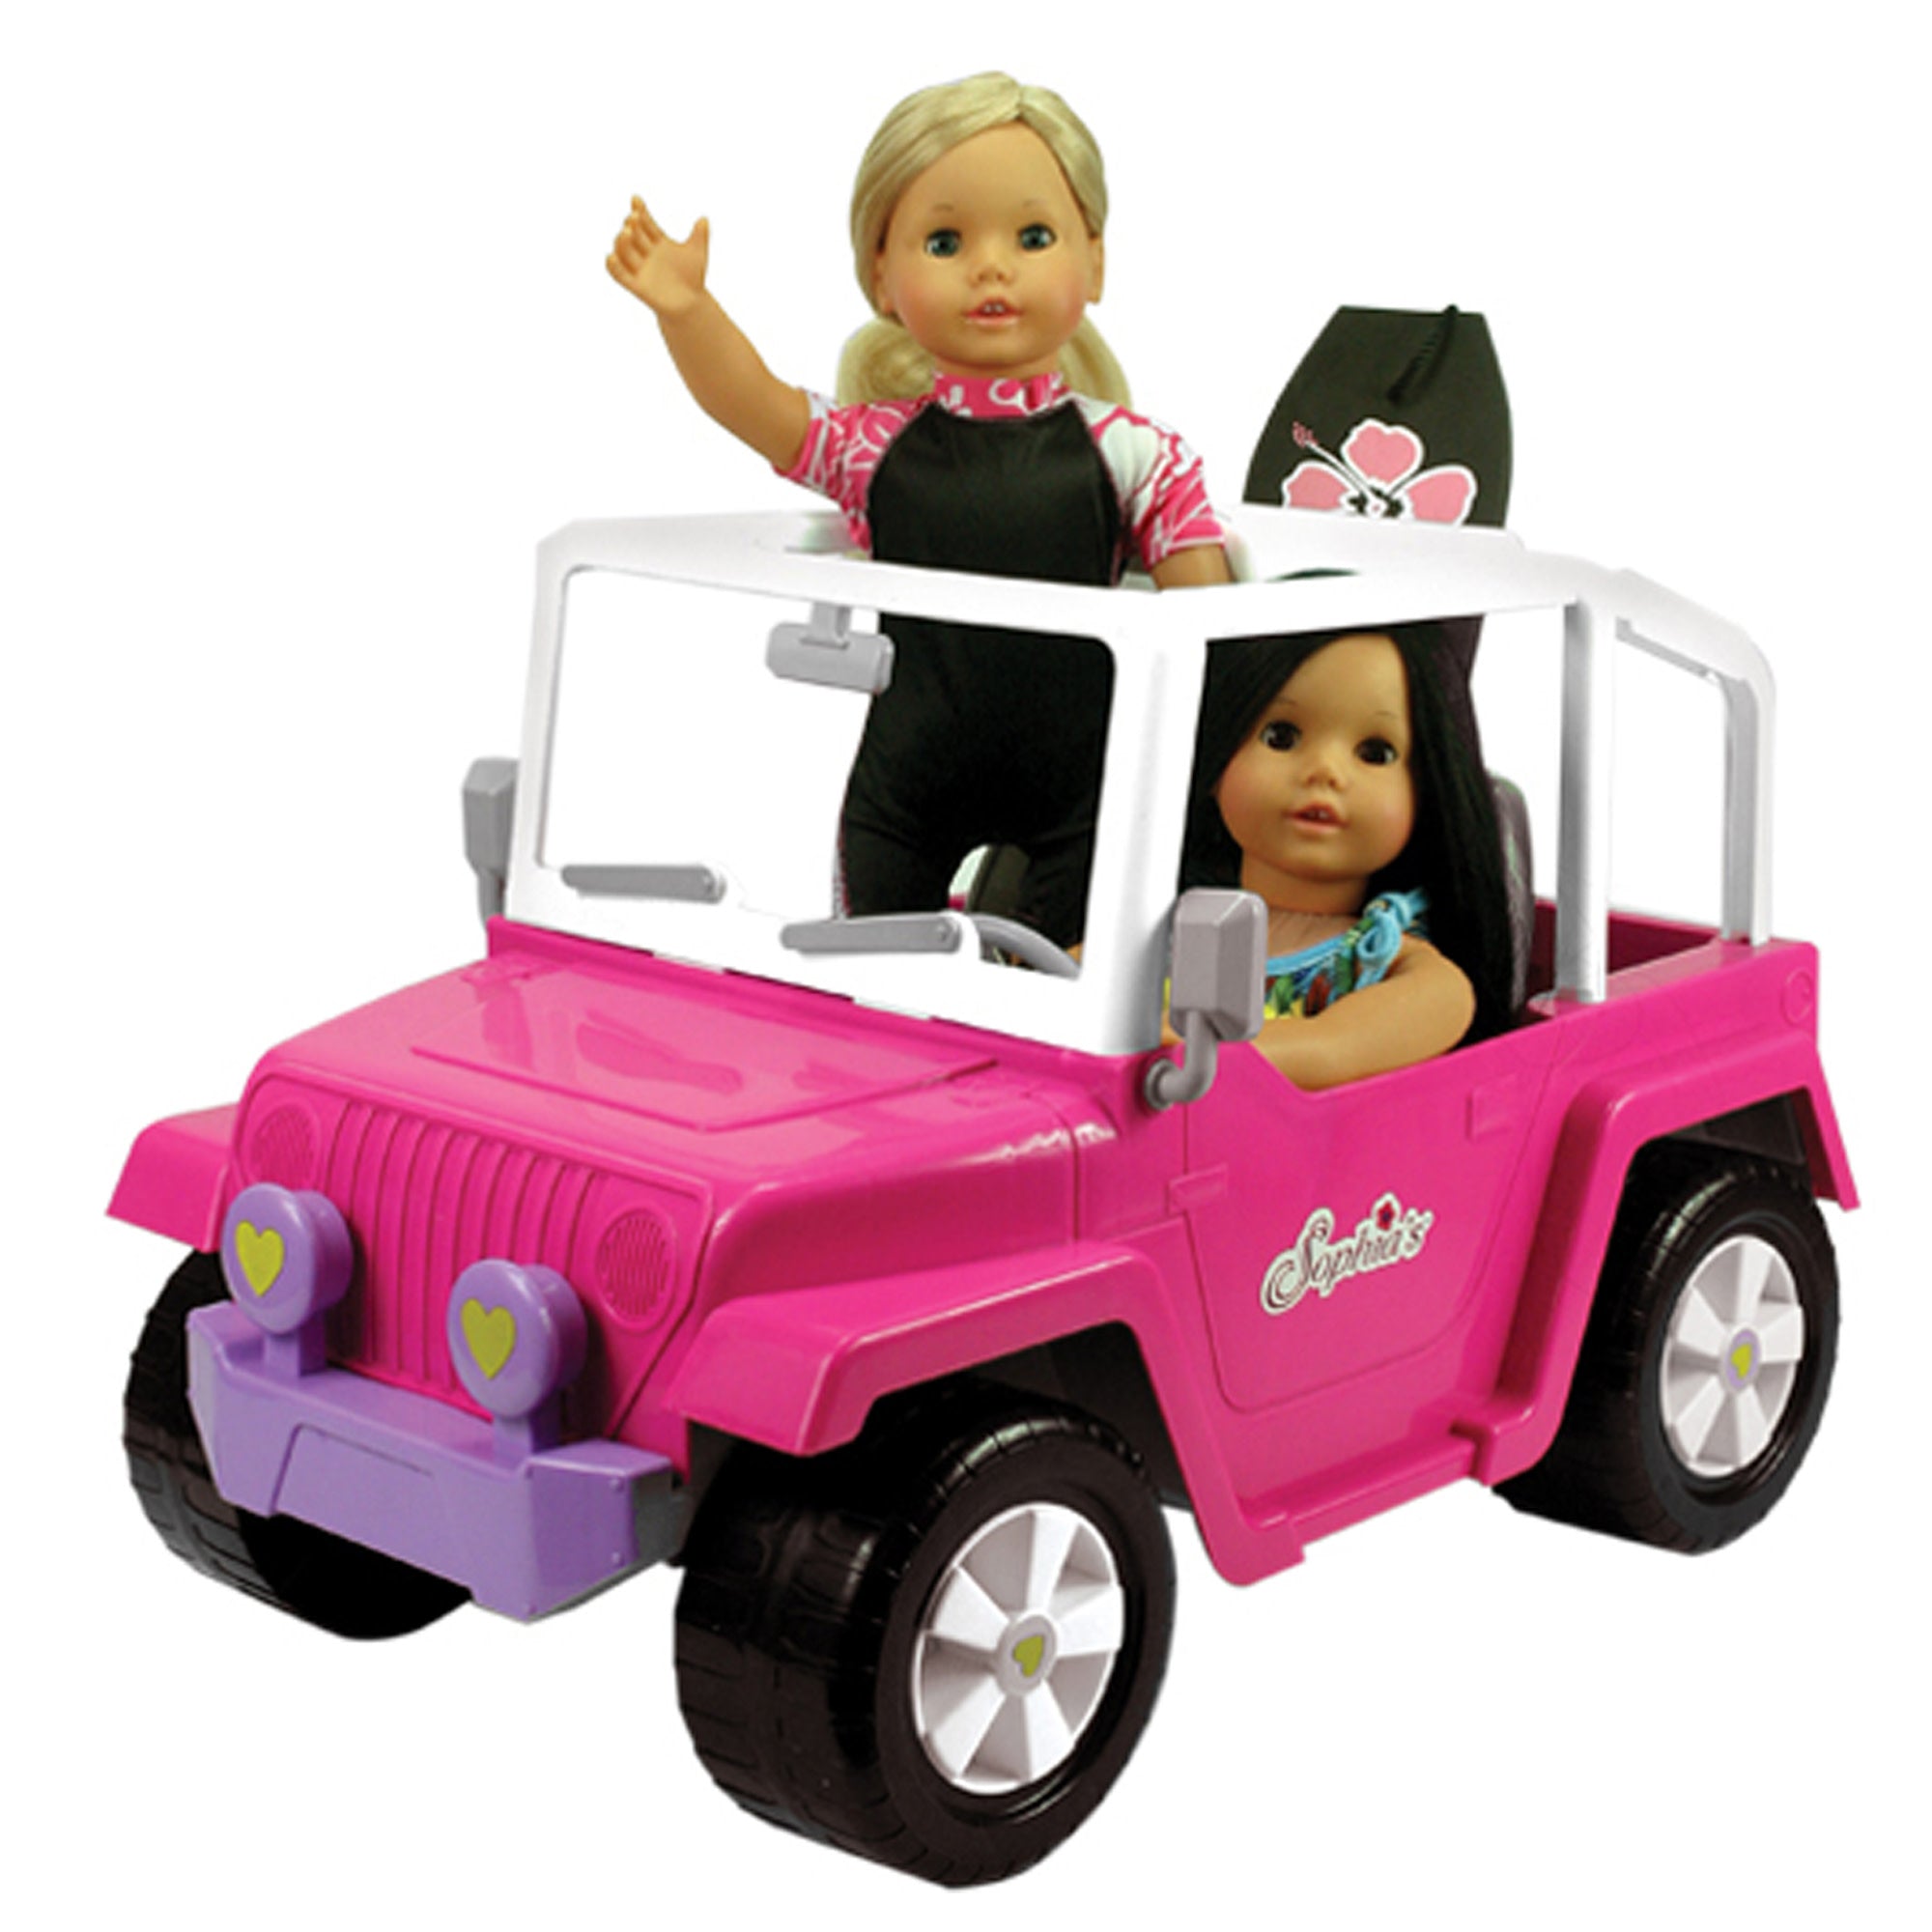 Sophias 4 x 4 Hot Pink Beach Cruiser Truck for 18" Dolls